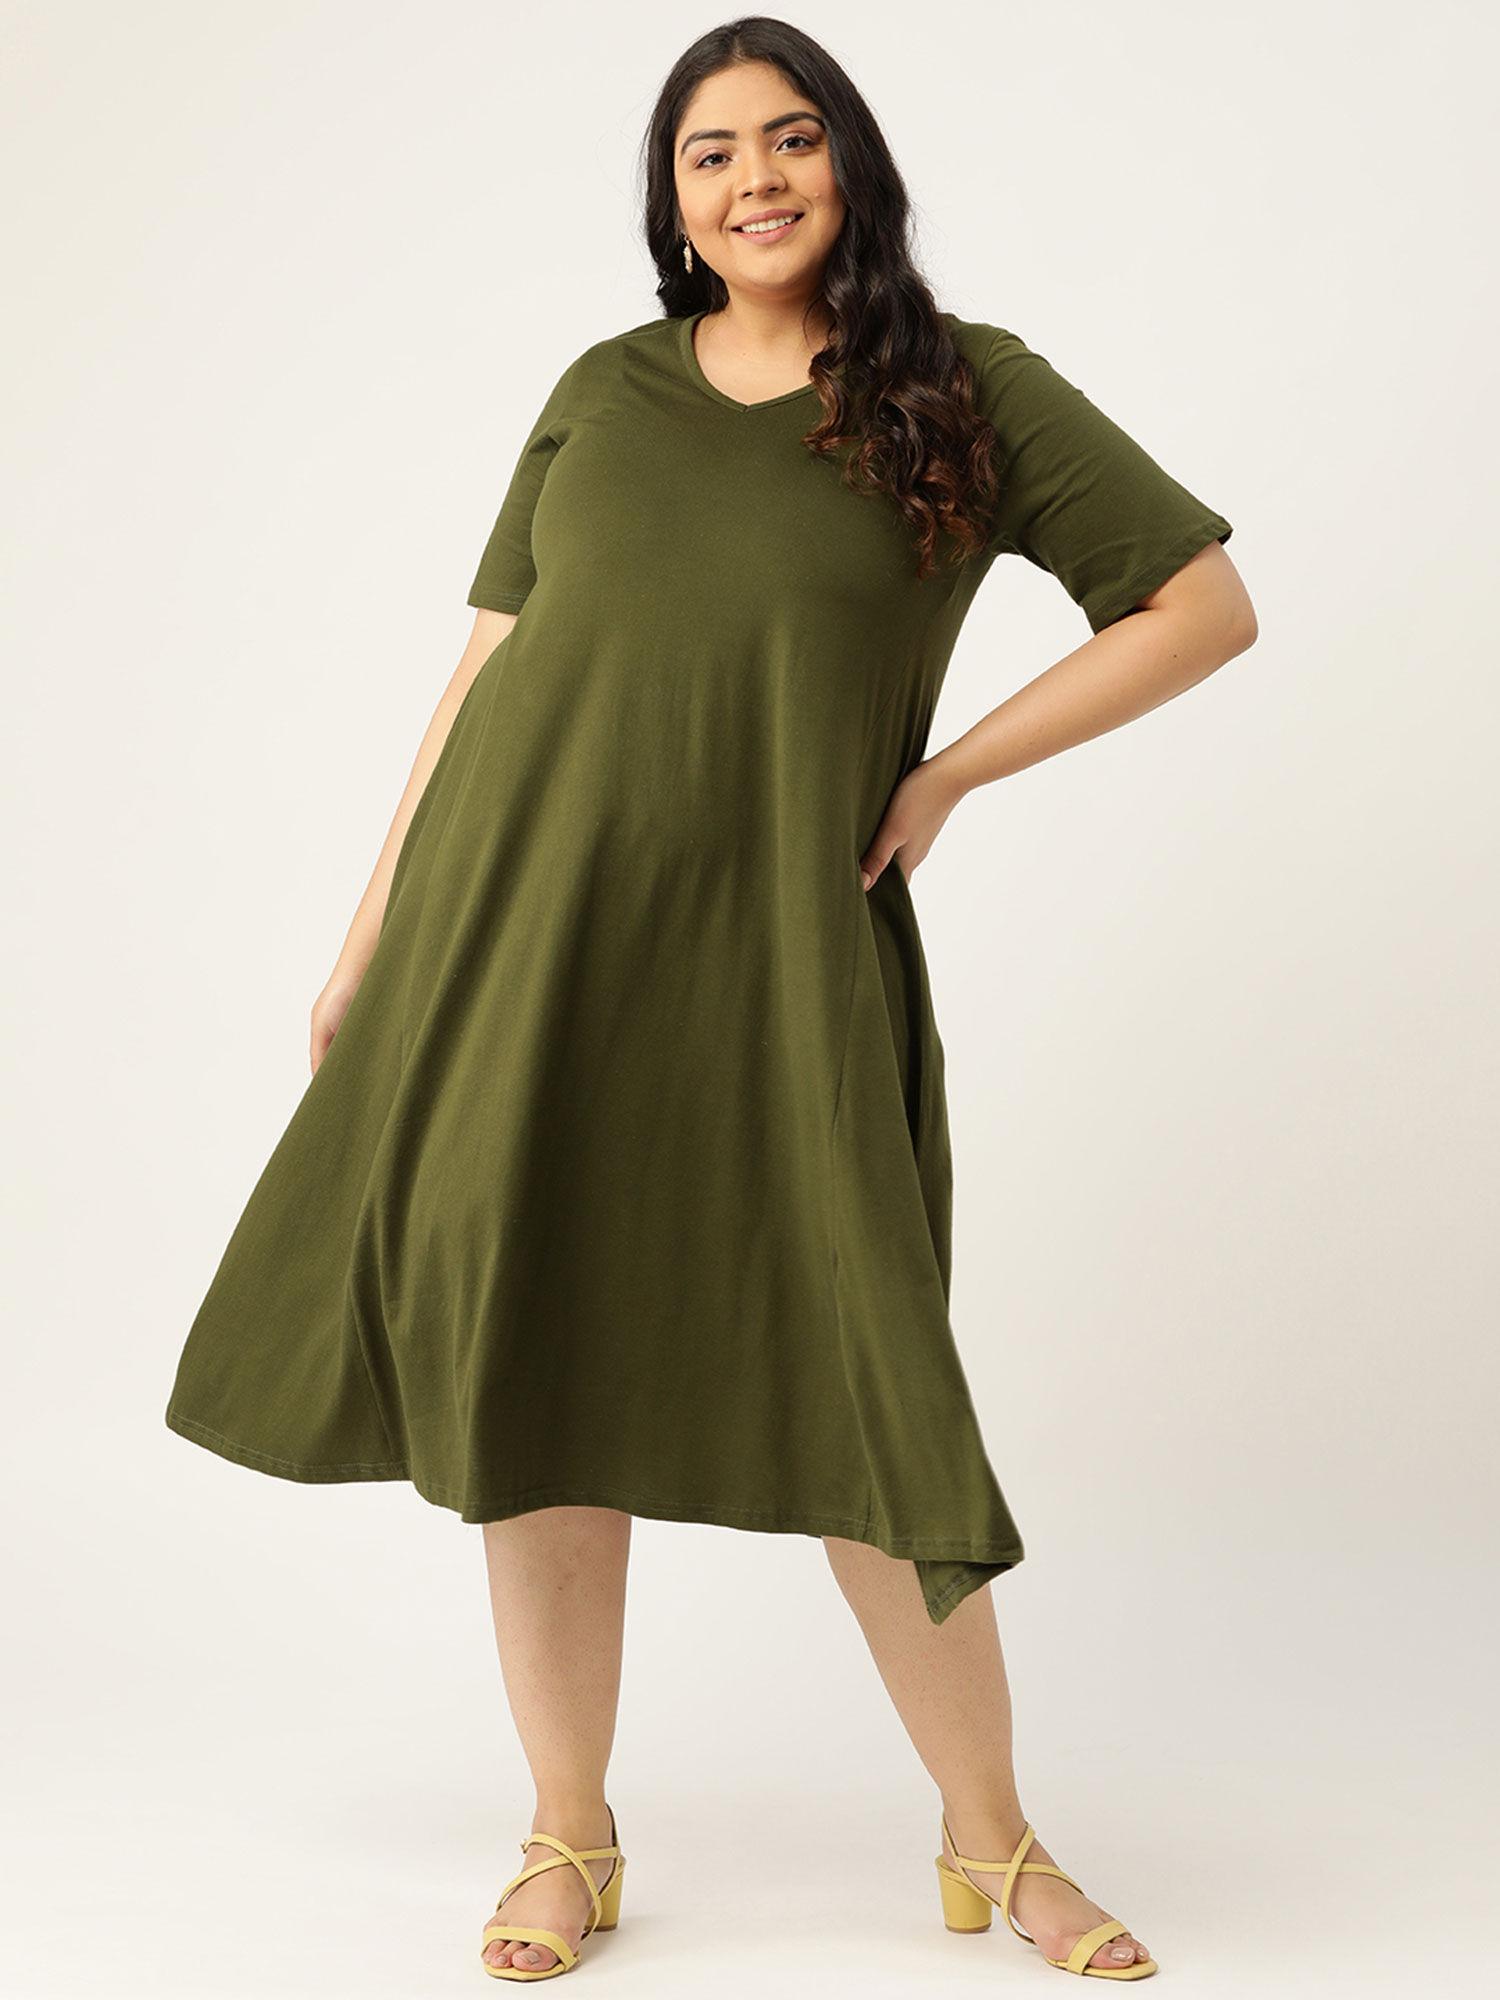 women's olive solid color v-neck cotton a-line dress